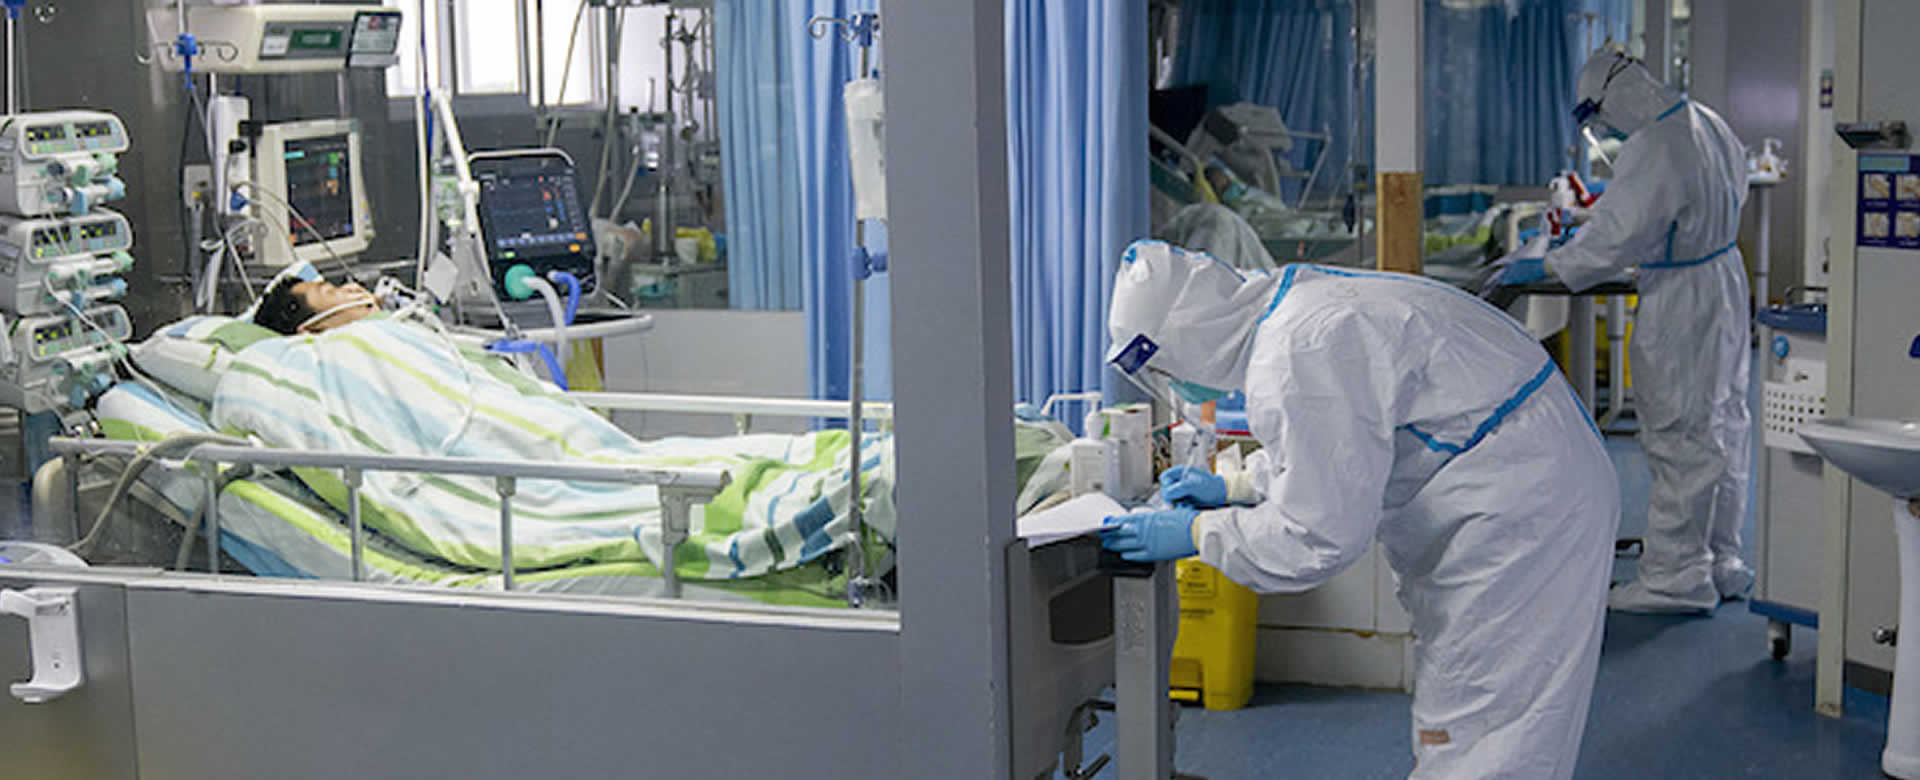 Inicia a operar el segundo Hospital para contagiados con coronavirus en Wuhan, China